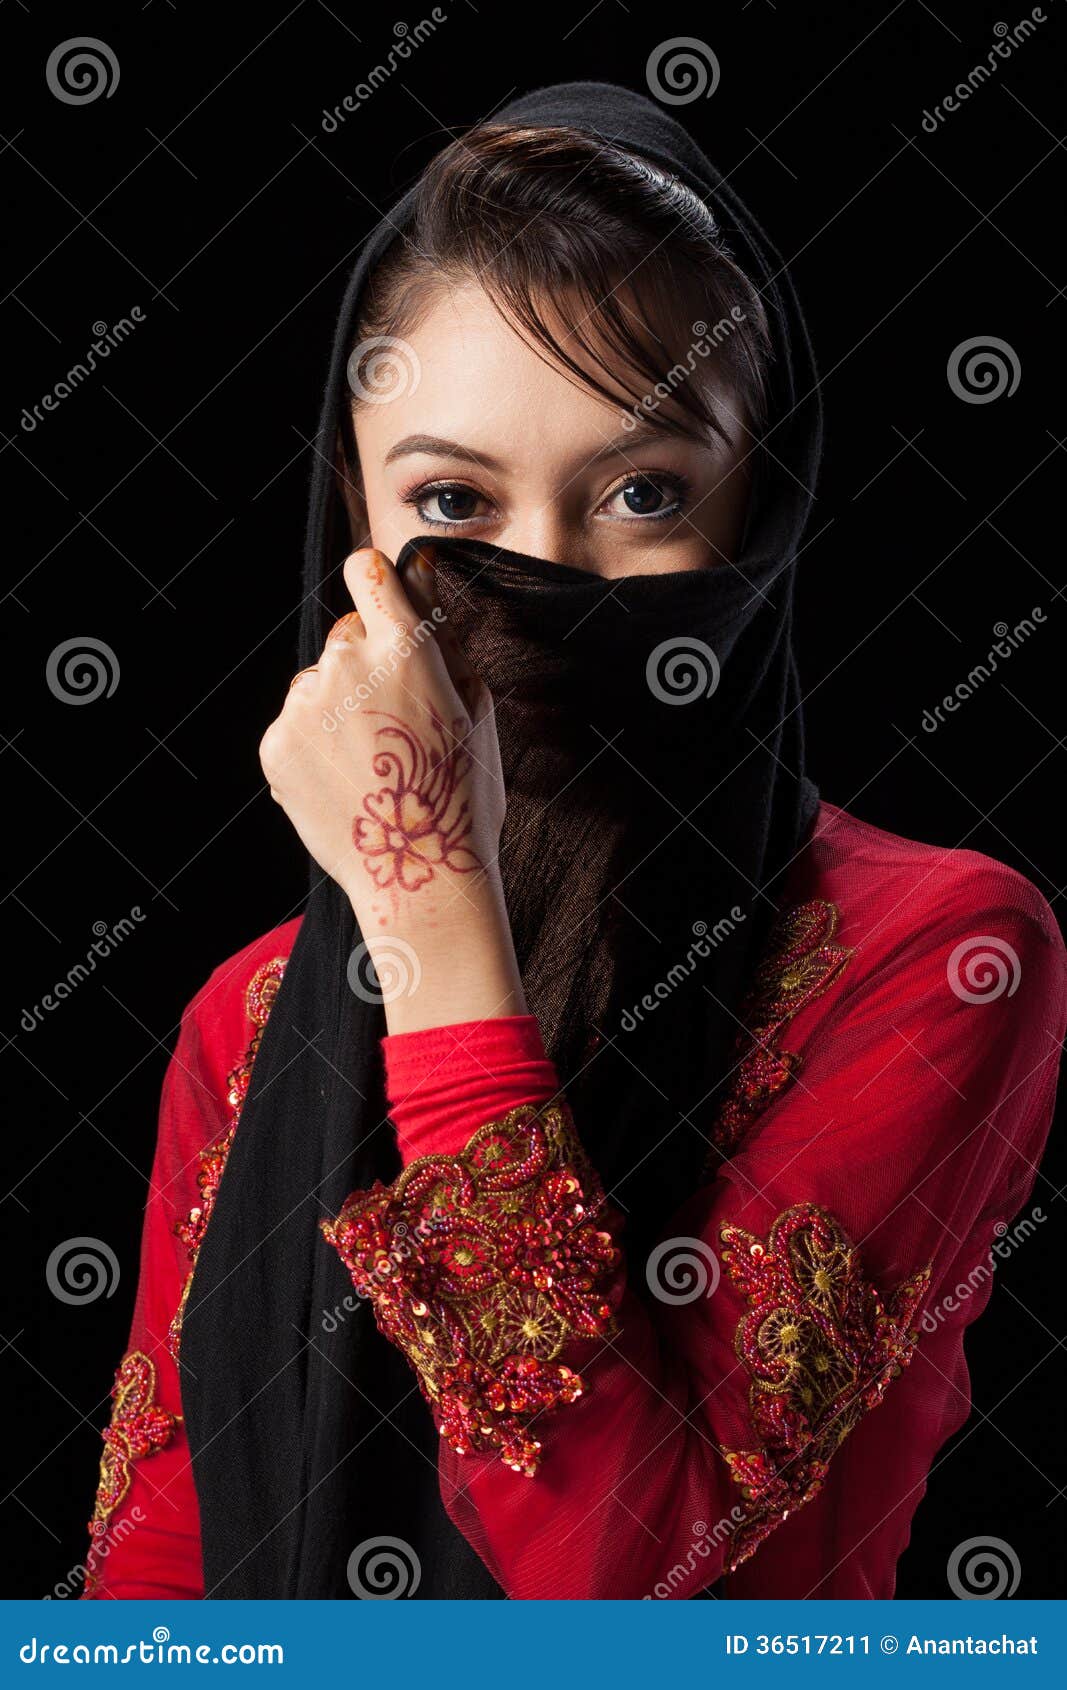 Muslim Girl Stock Image - Image: 36517211